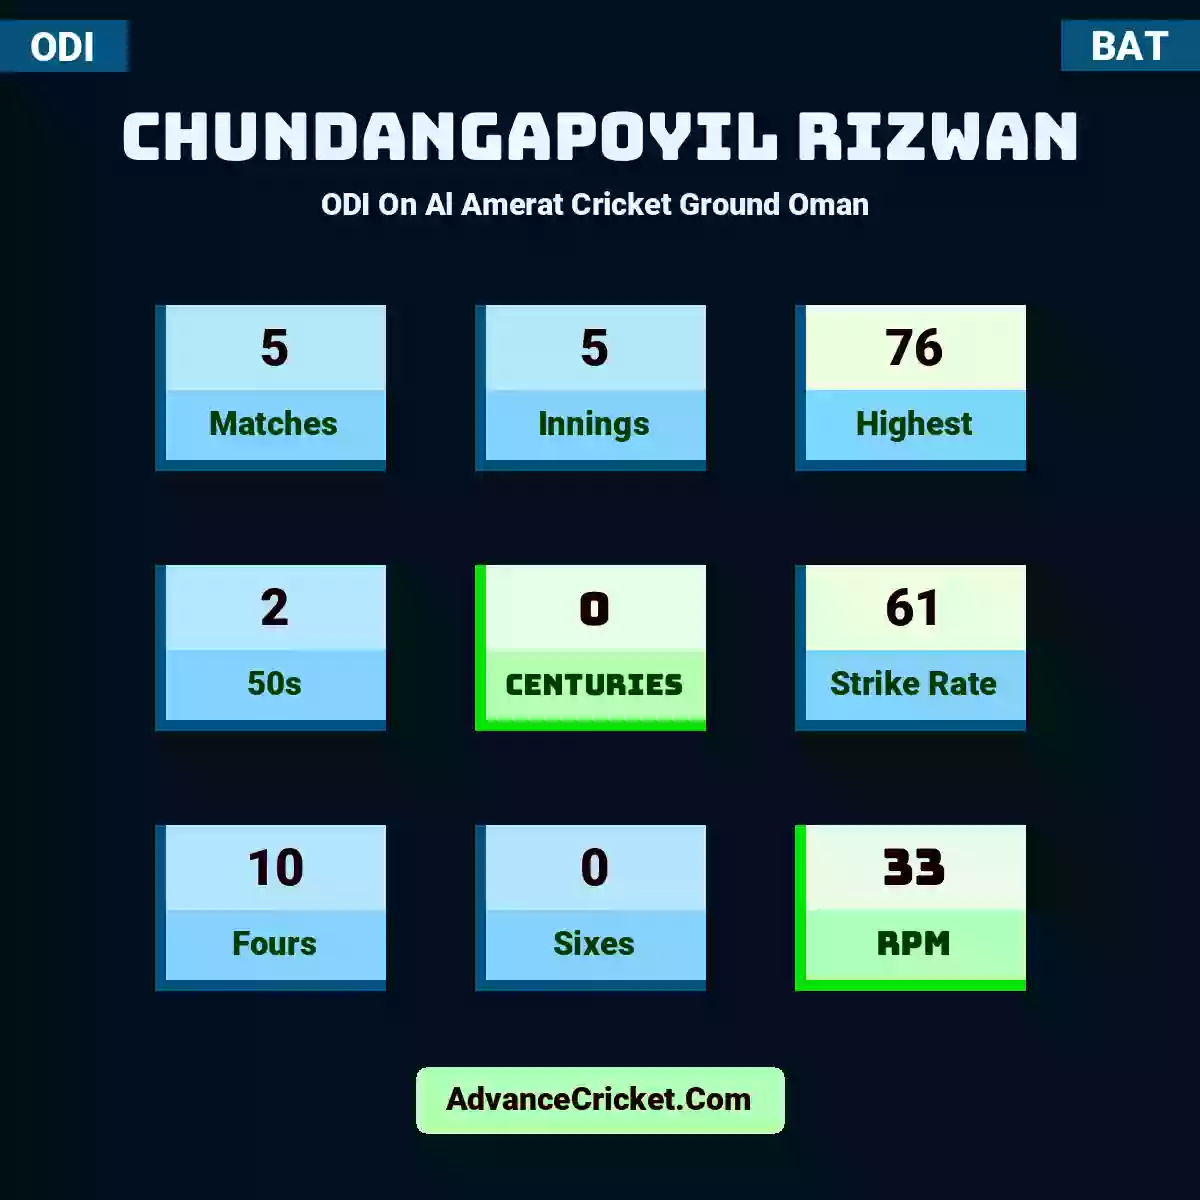 Chundangapoyil Rizwan ODI  On Al Amerat Cricket Ground Oman , Chundangapoyil Rizwan played 5 matches, scored 76 runs as highest, 2 half-centuries, and 0 centuries, with a strike rate of 61. C.Rizwan hit 10 fours and 0 sixes, with an RPM of 33.